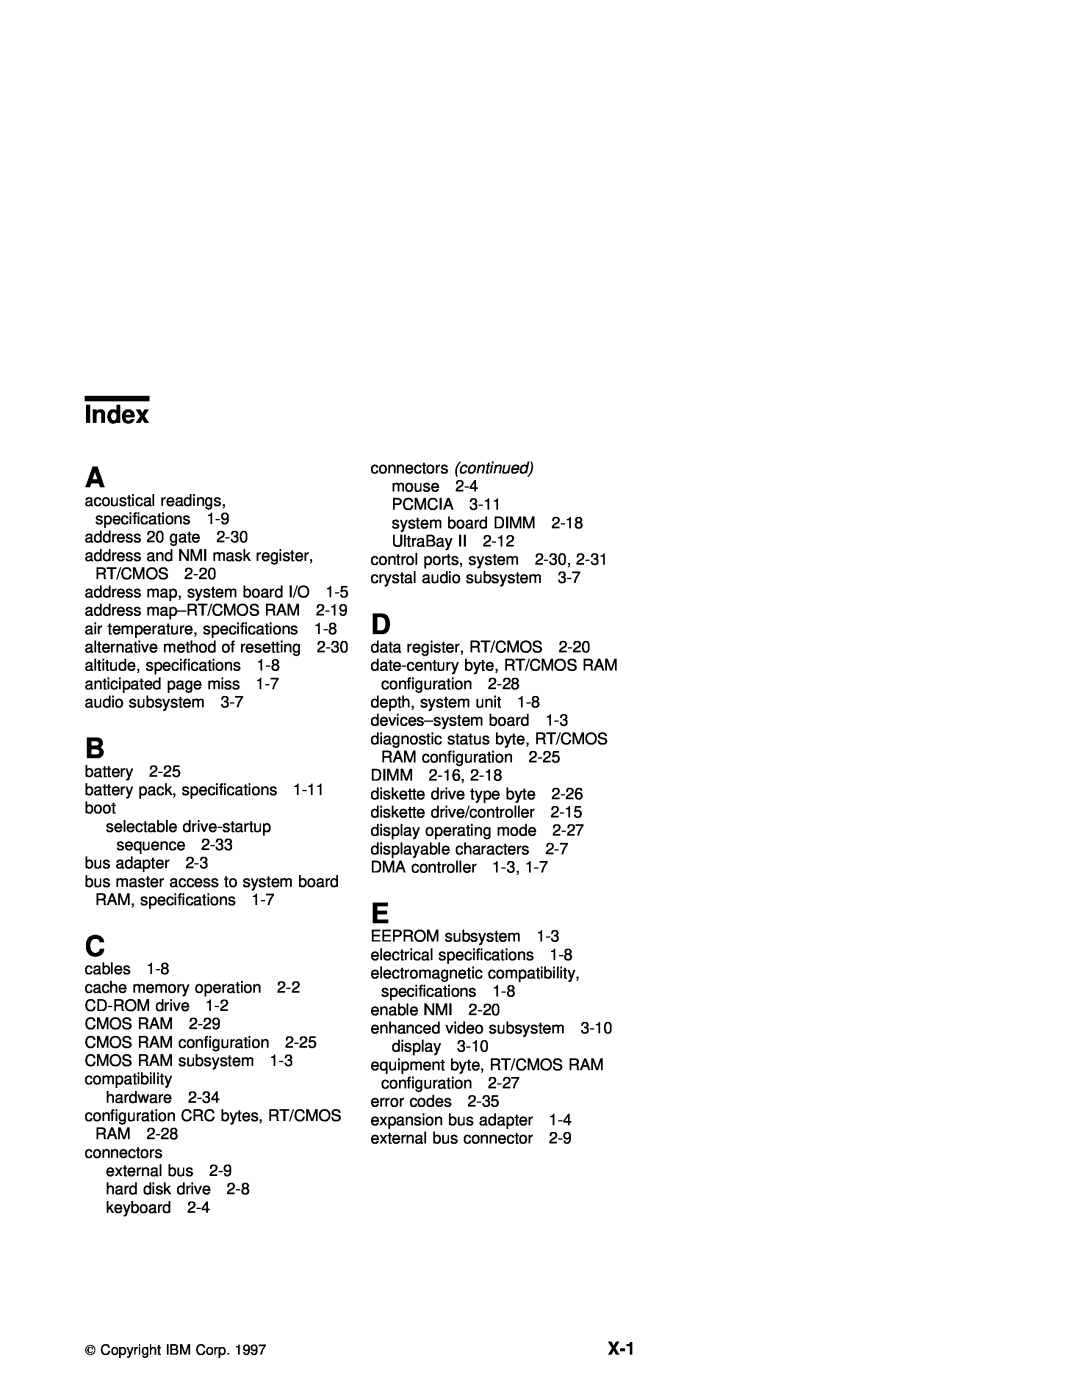 IBM 770 manual Index 